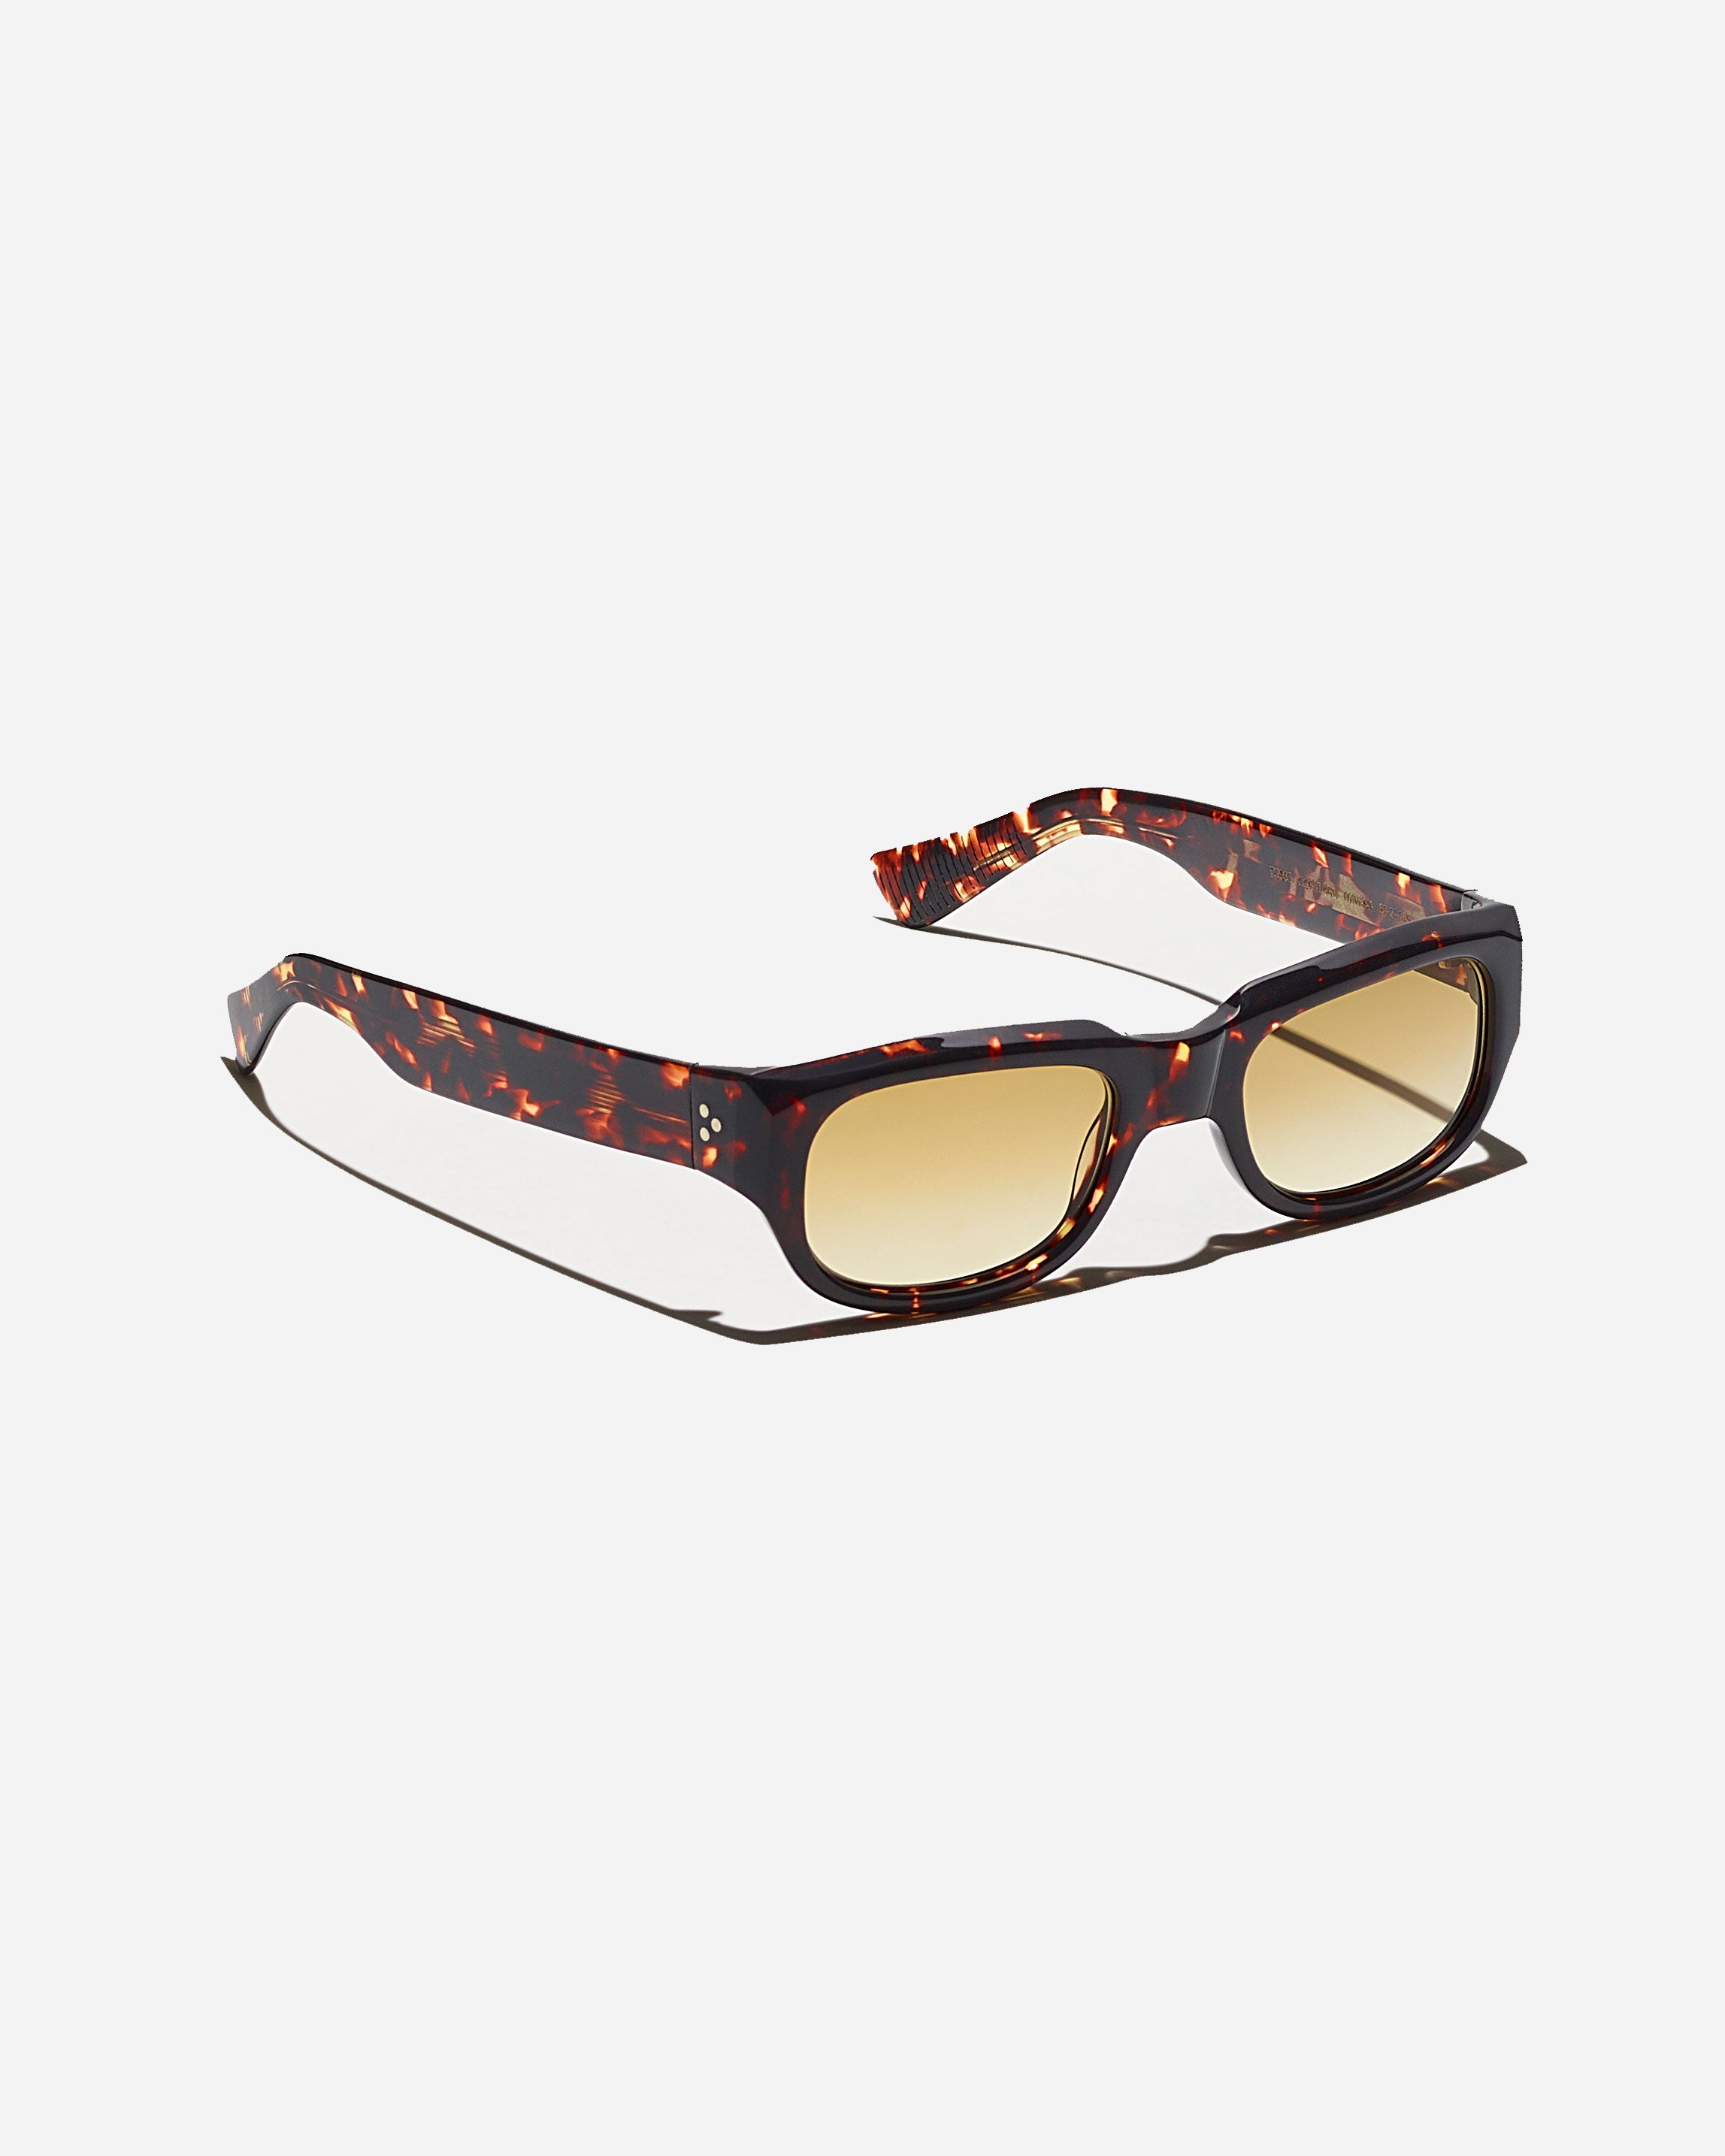 LOUIS VUITTON TORTOISE Shell Acetate Frame Mascot Sunglasses